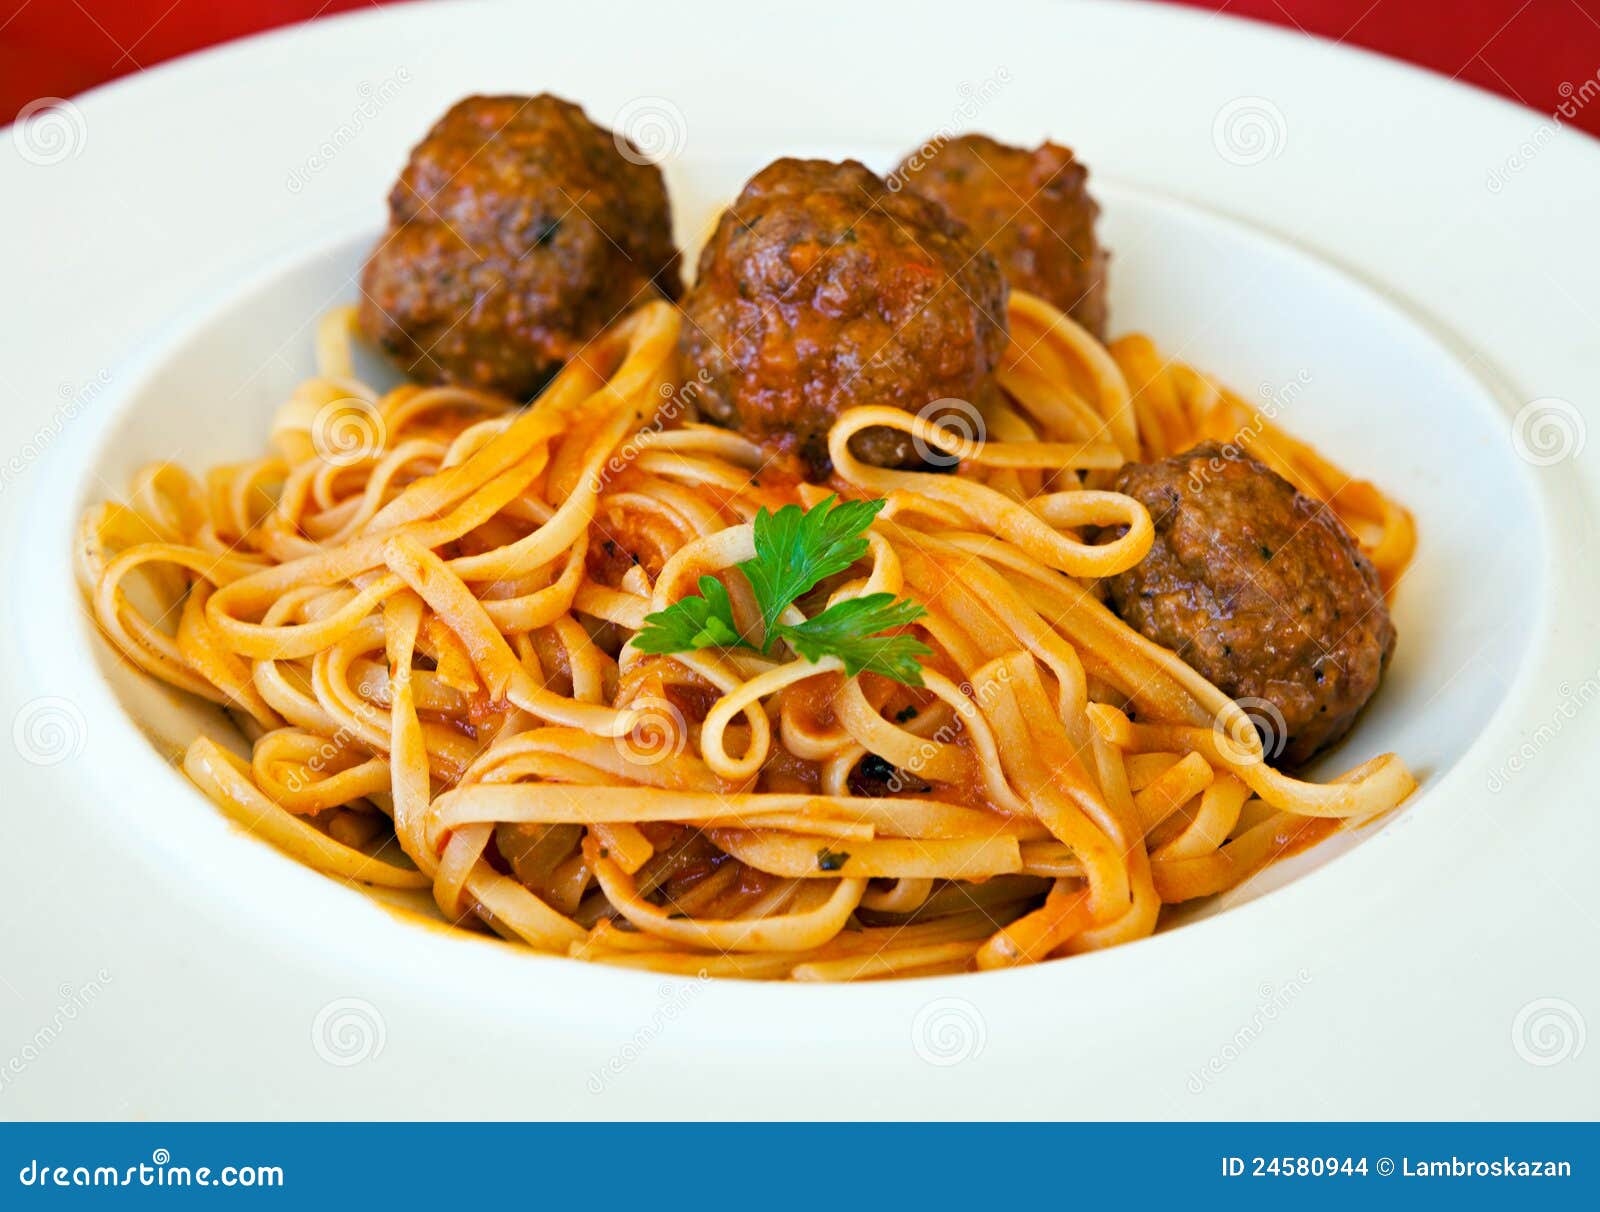 spaghetti and meatballs clipart - photo #41